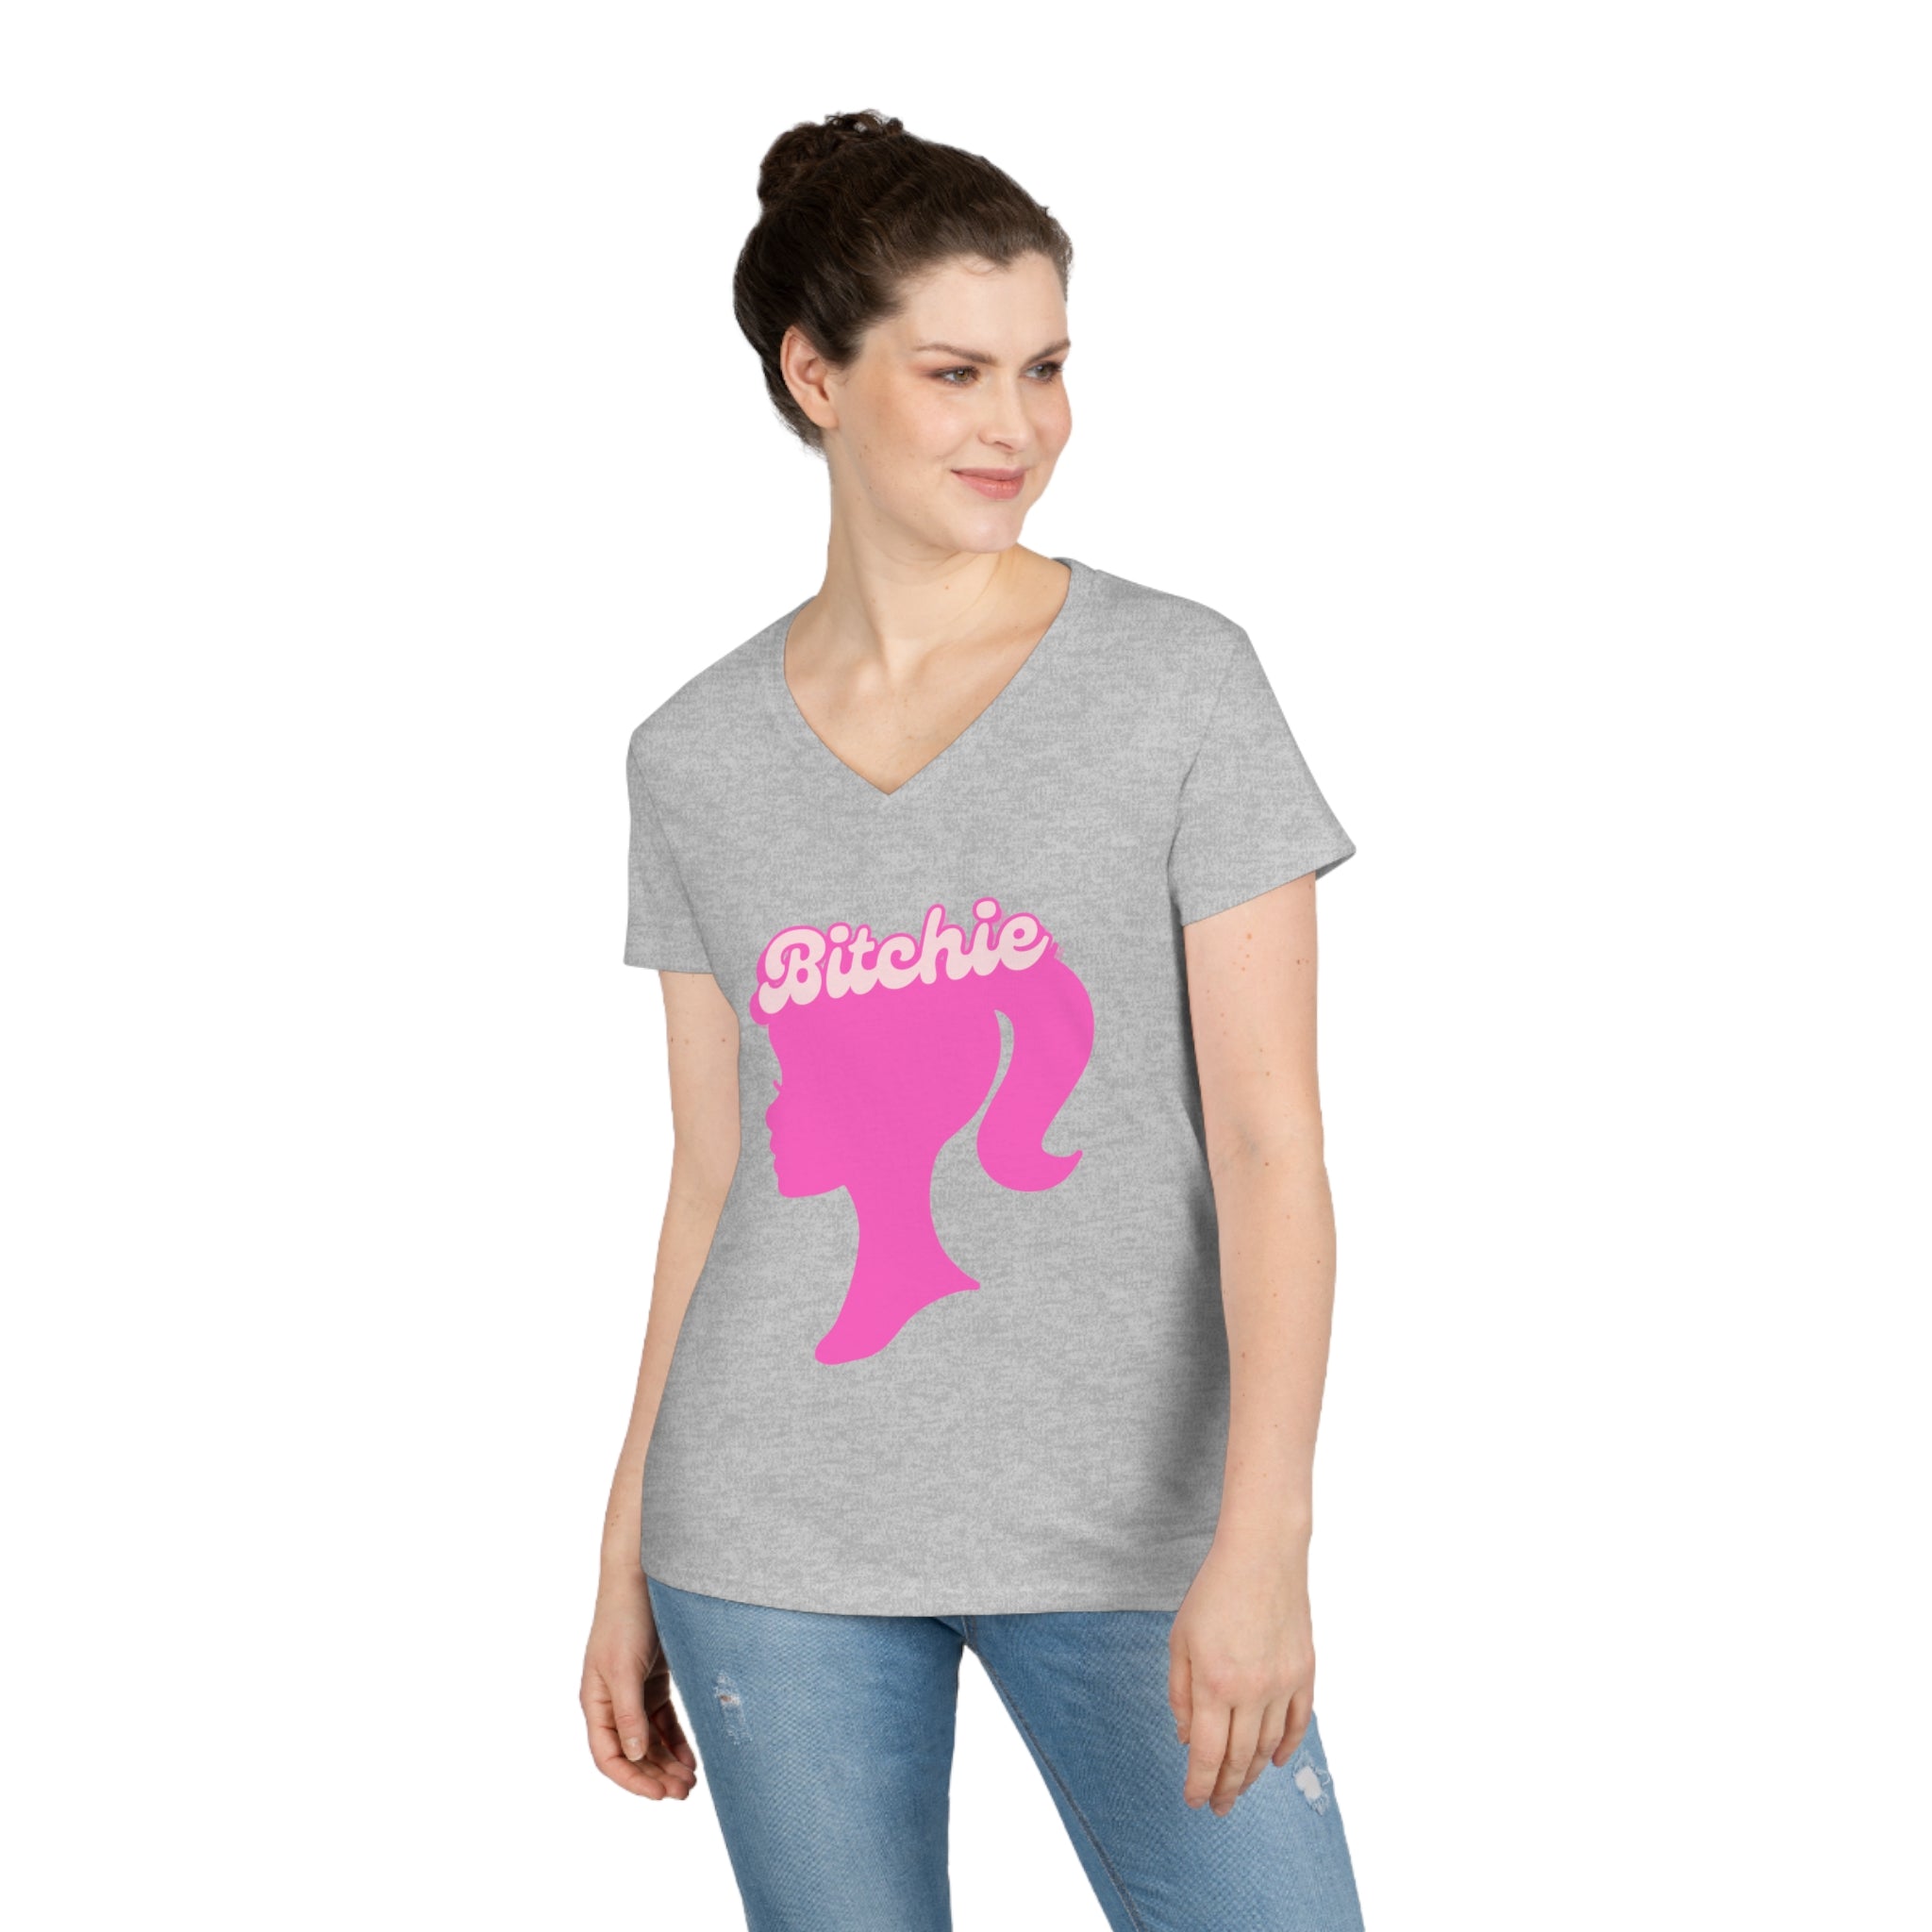  Bitchie (Barbie Image) Funny Women's V Neck T-shirt, Cute Graphic Tee V-neck